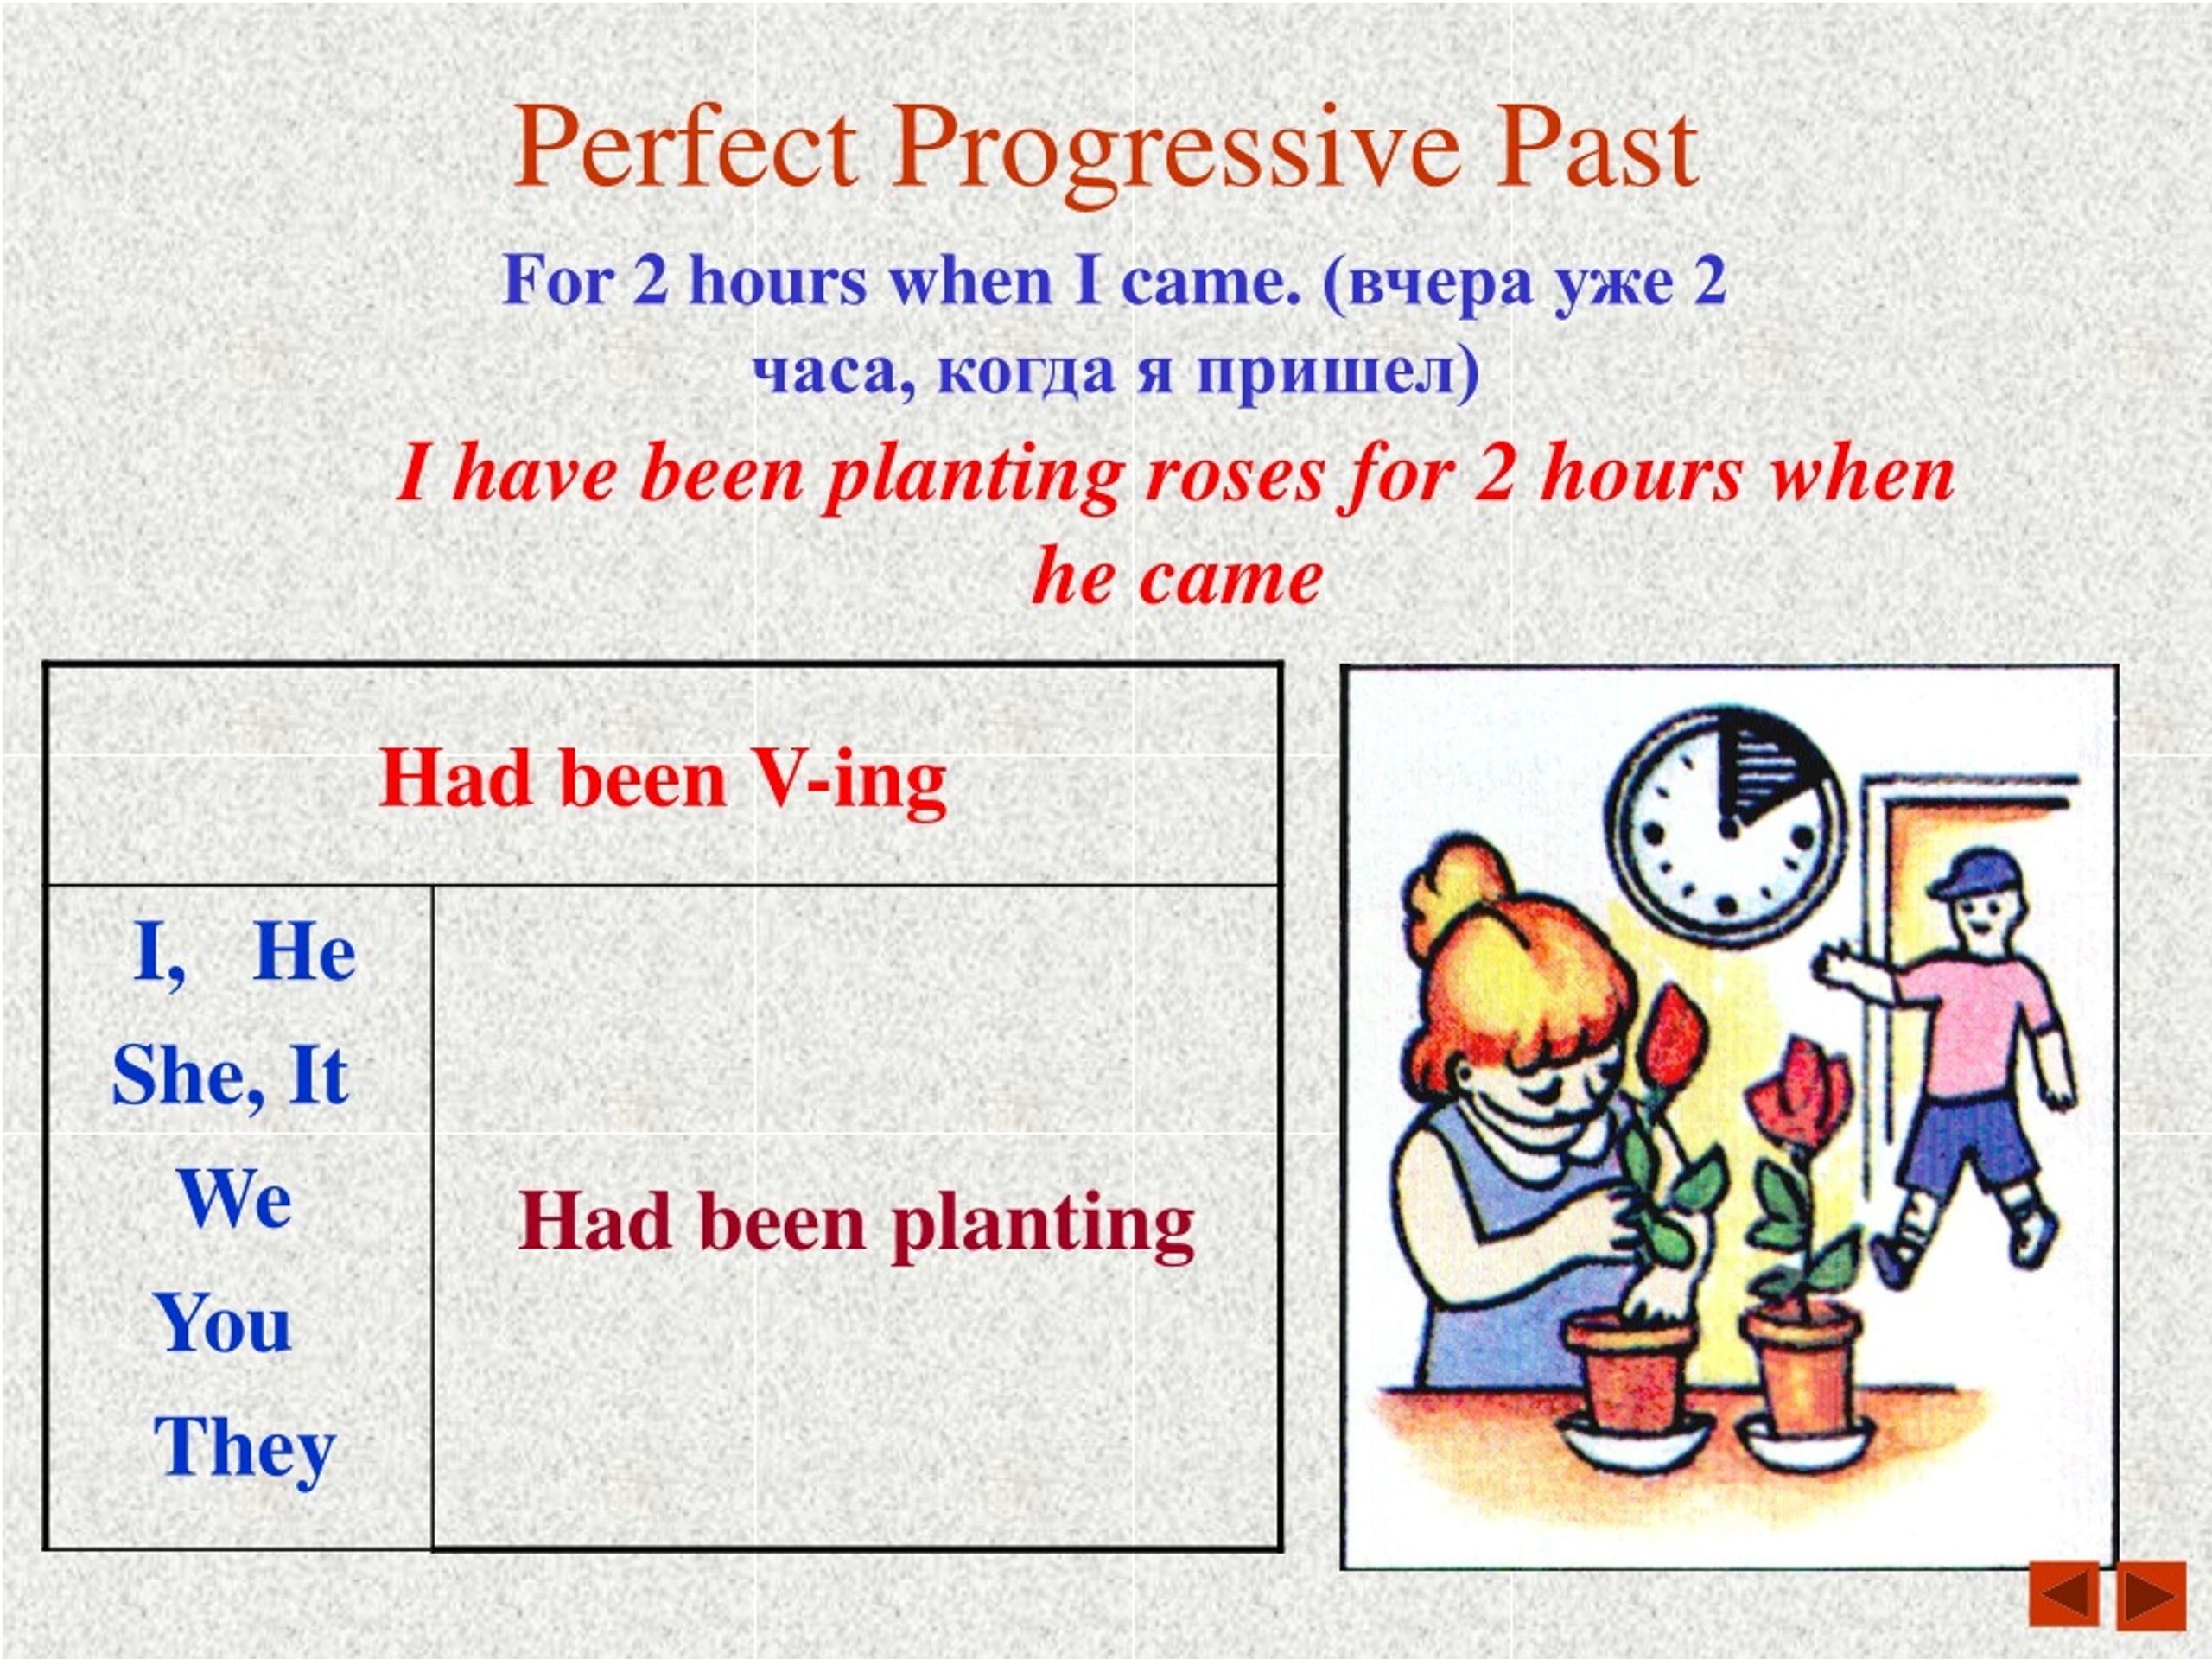 Past perfect present perfect continuous предложения. Паст Перфект прогрессив. Past perfect Progressive Tense. Past perfect for. Past Progressive present perfect.